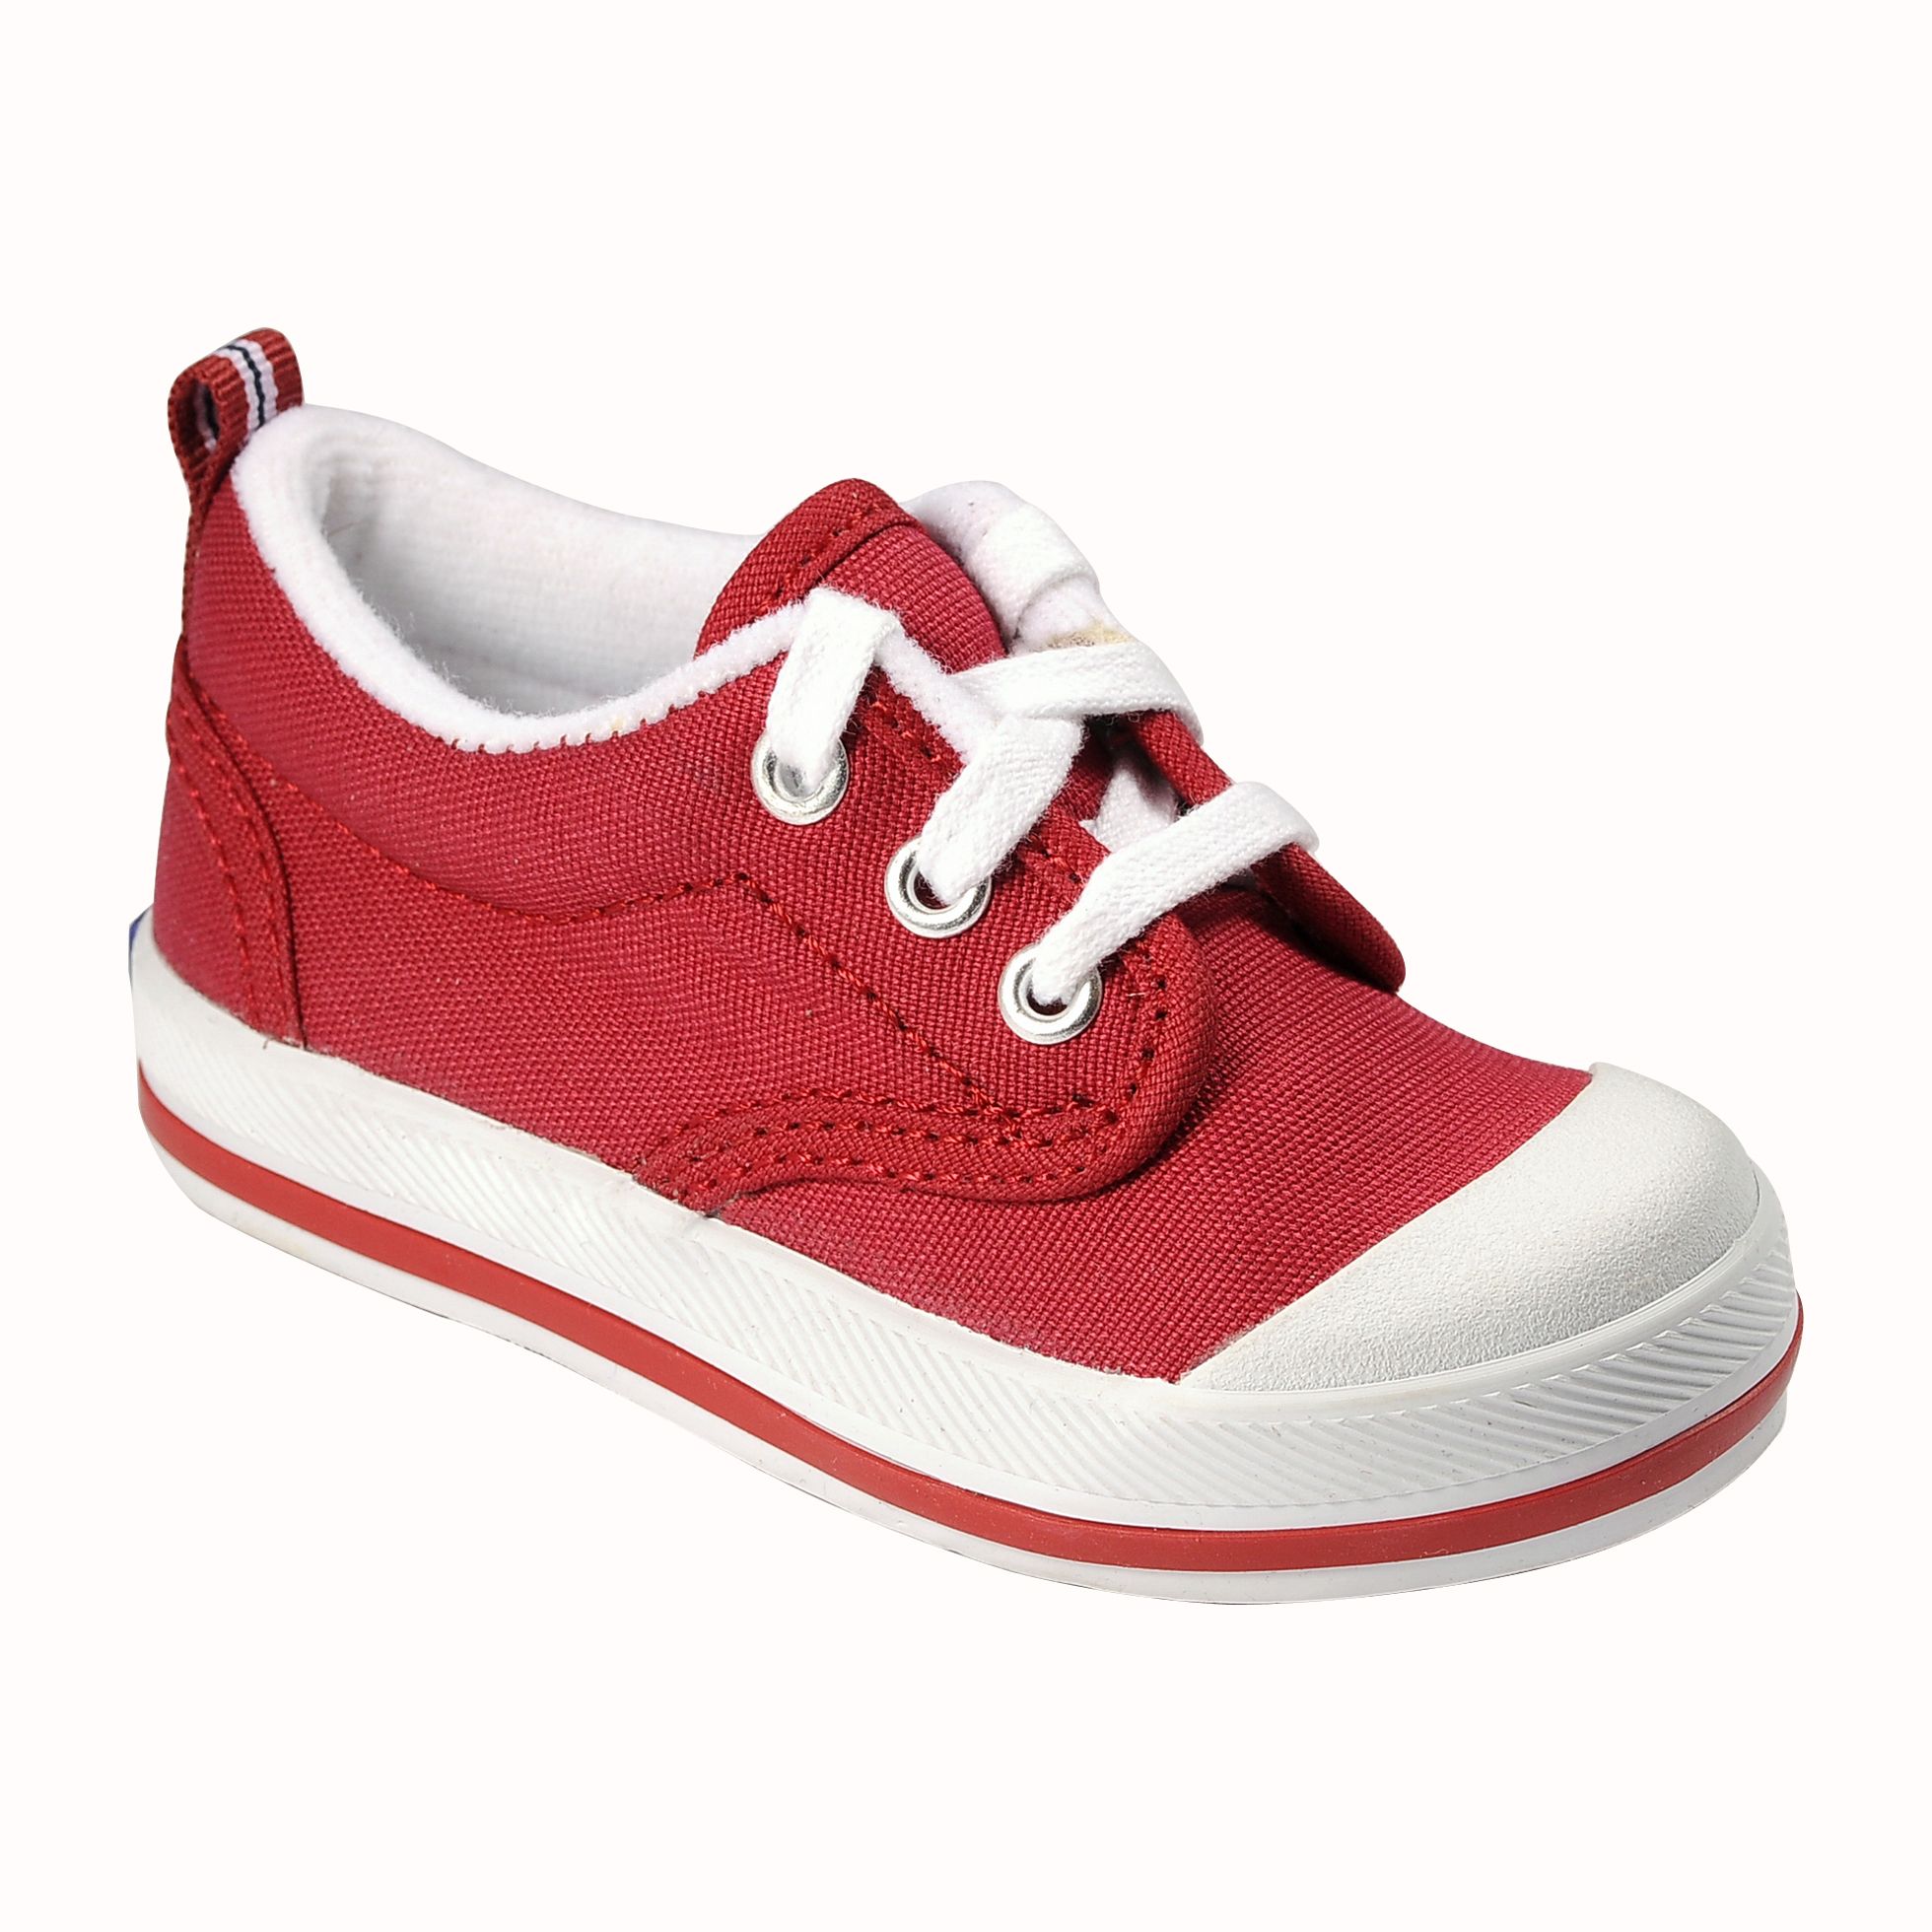 Keds Toddler Boys' Graham Oxford Shoe - Red